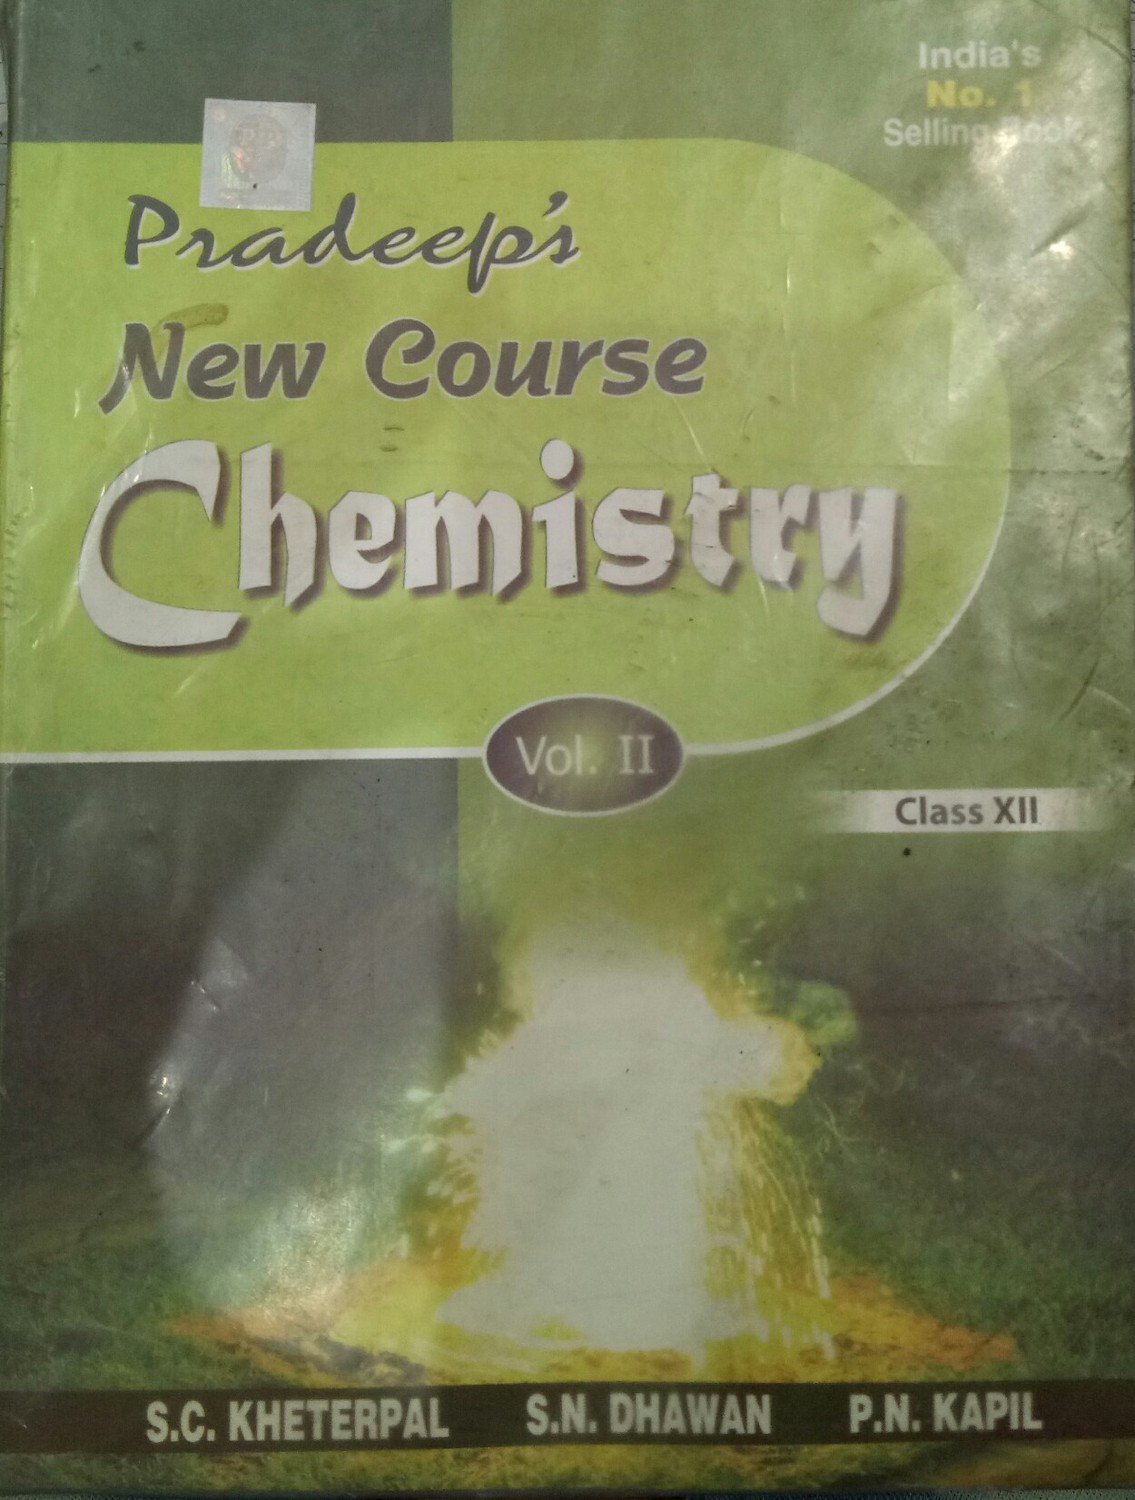 Pradeeps New Course Chemistry Vol. III Class - 11 Pradeeps New Course Chemistry Vol. III Class - 11 by S.C. Kheterpal Dr. S.N. Dhawan